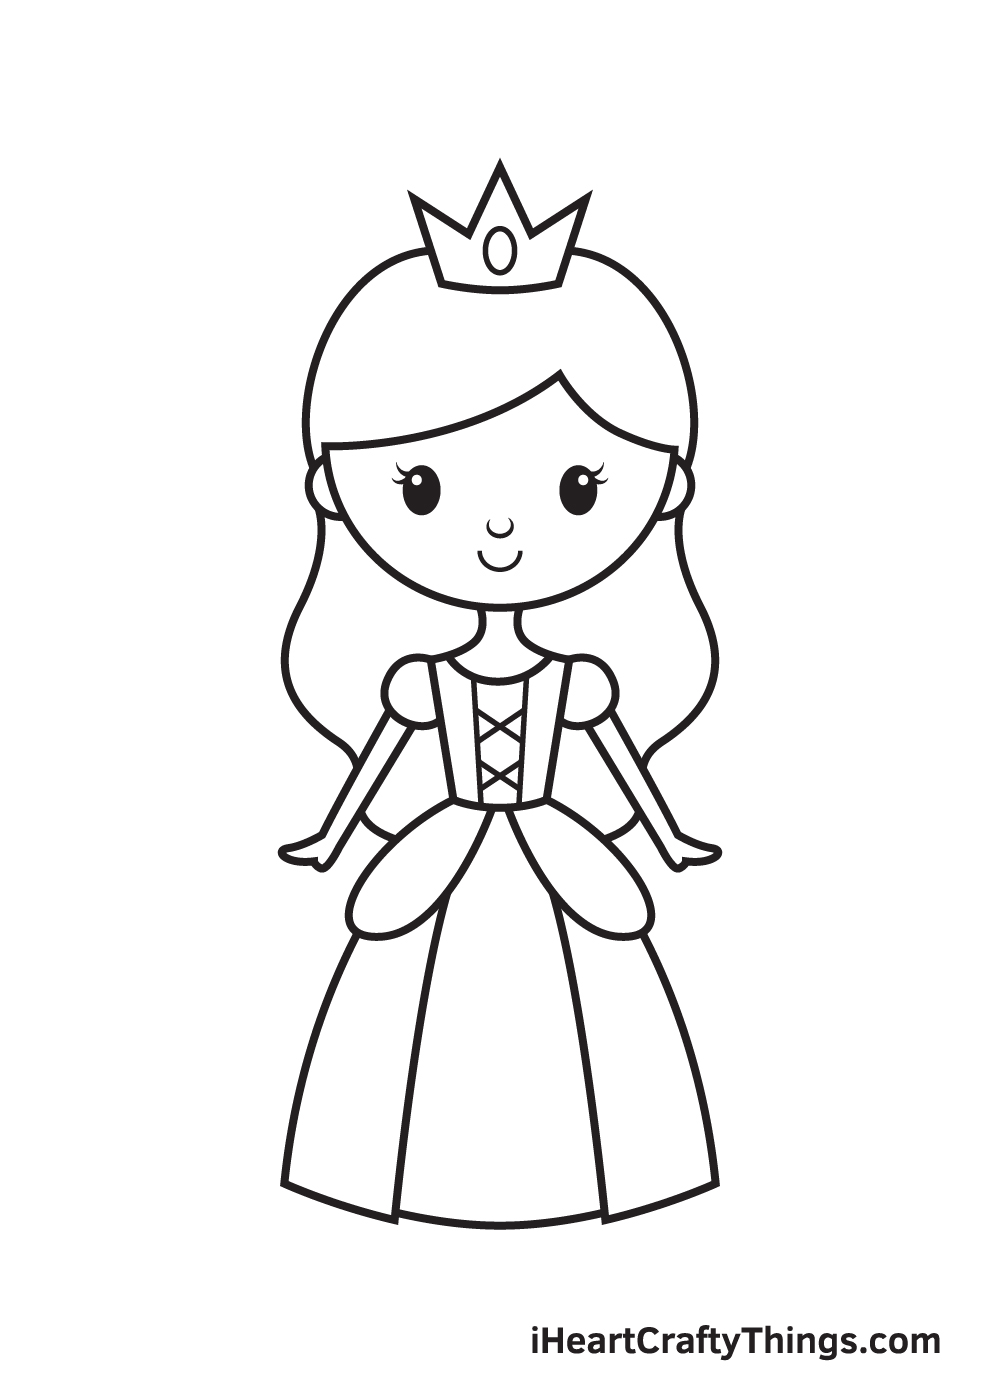 Princess Drawing - Step 9